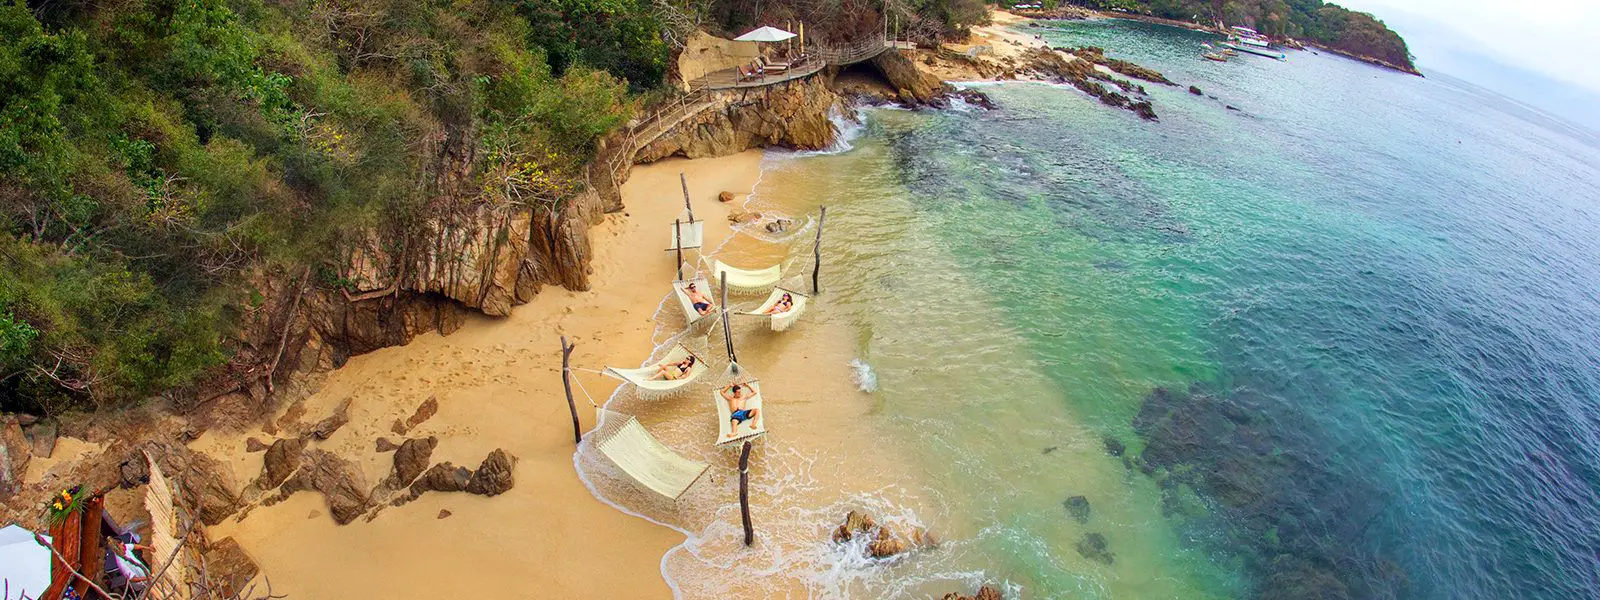 Las Caletas Beach Hideaway, Puerto Vallarta - beach hammocks